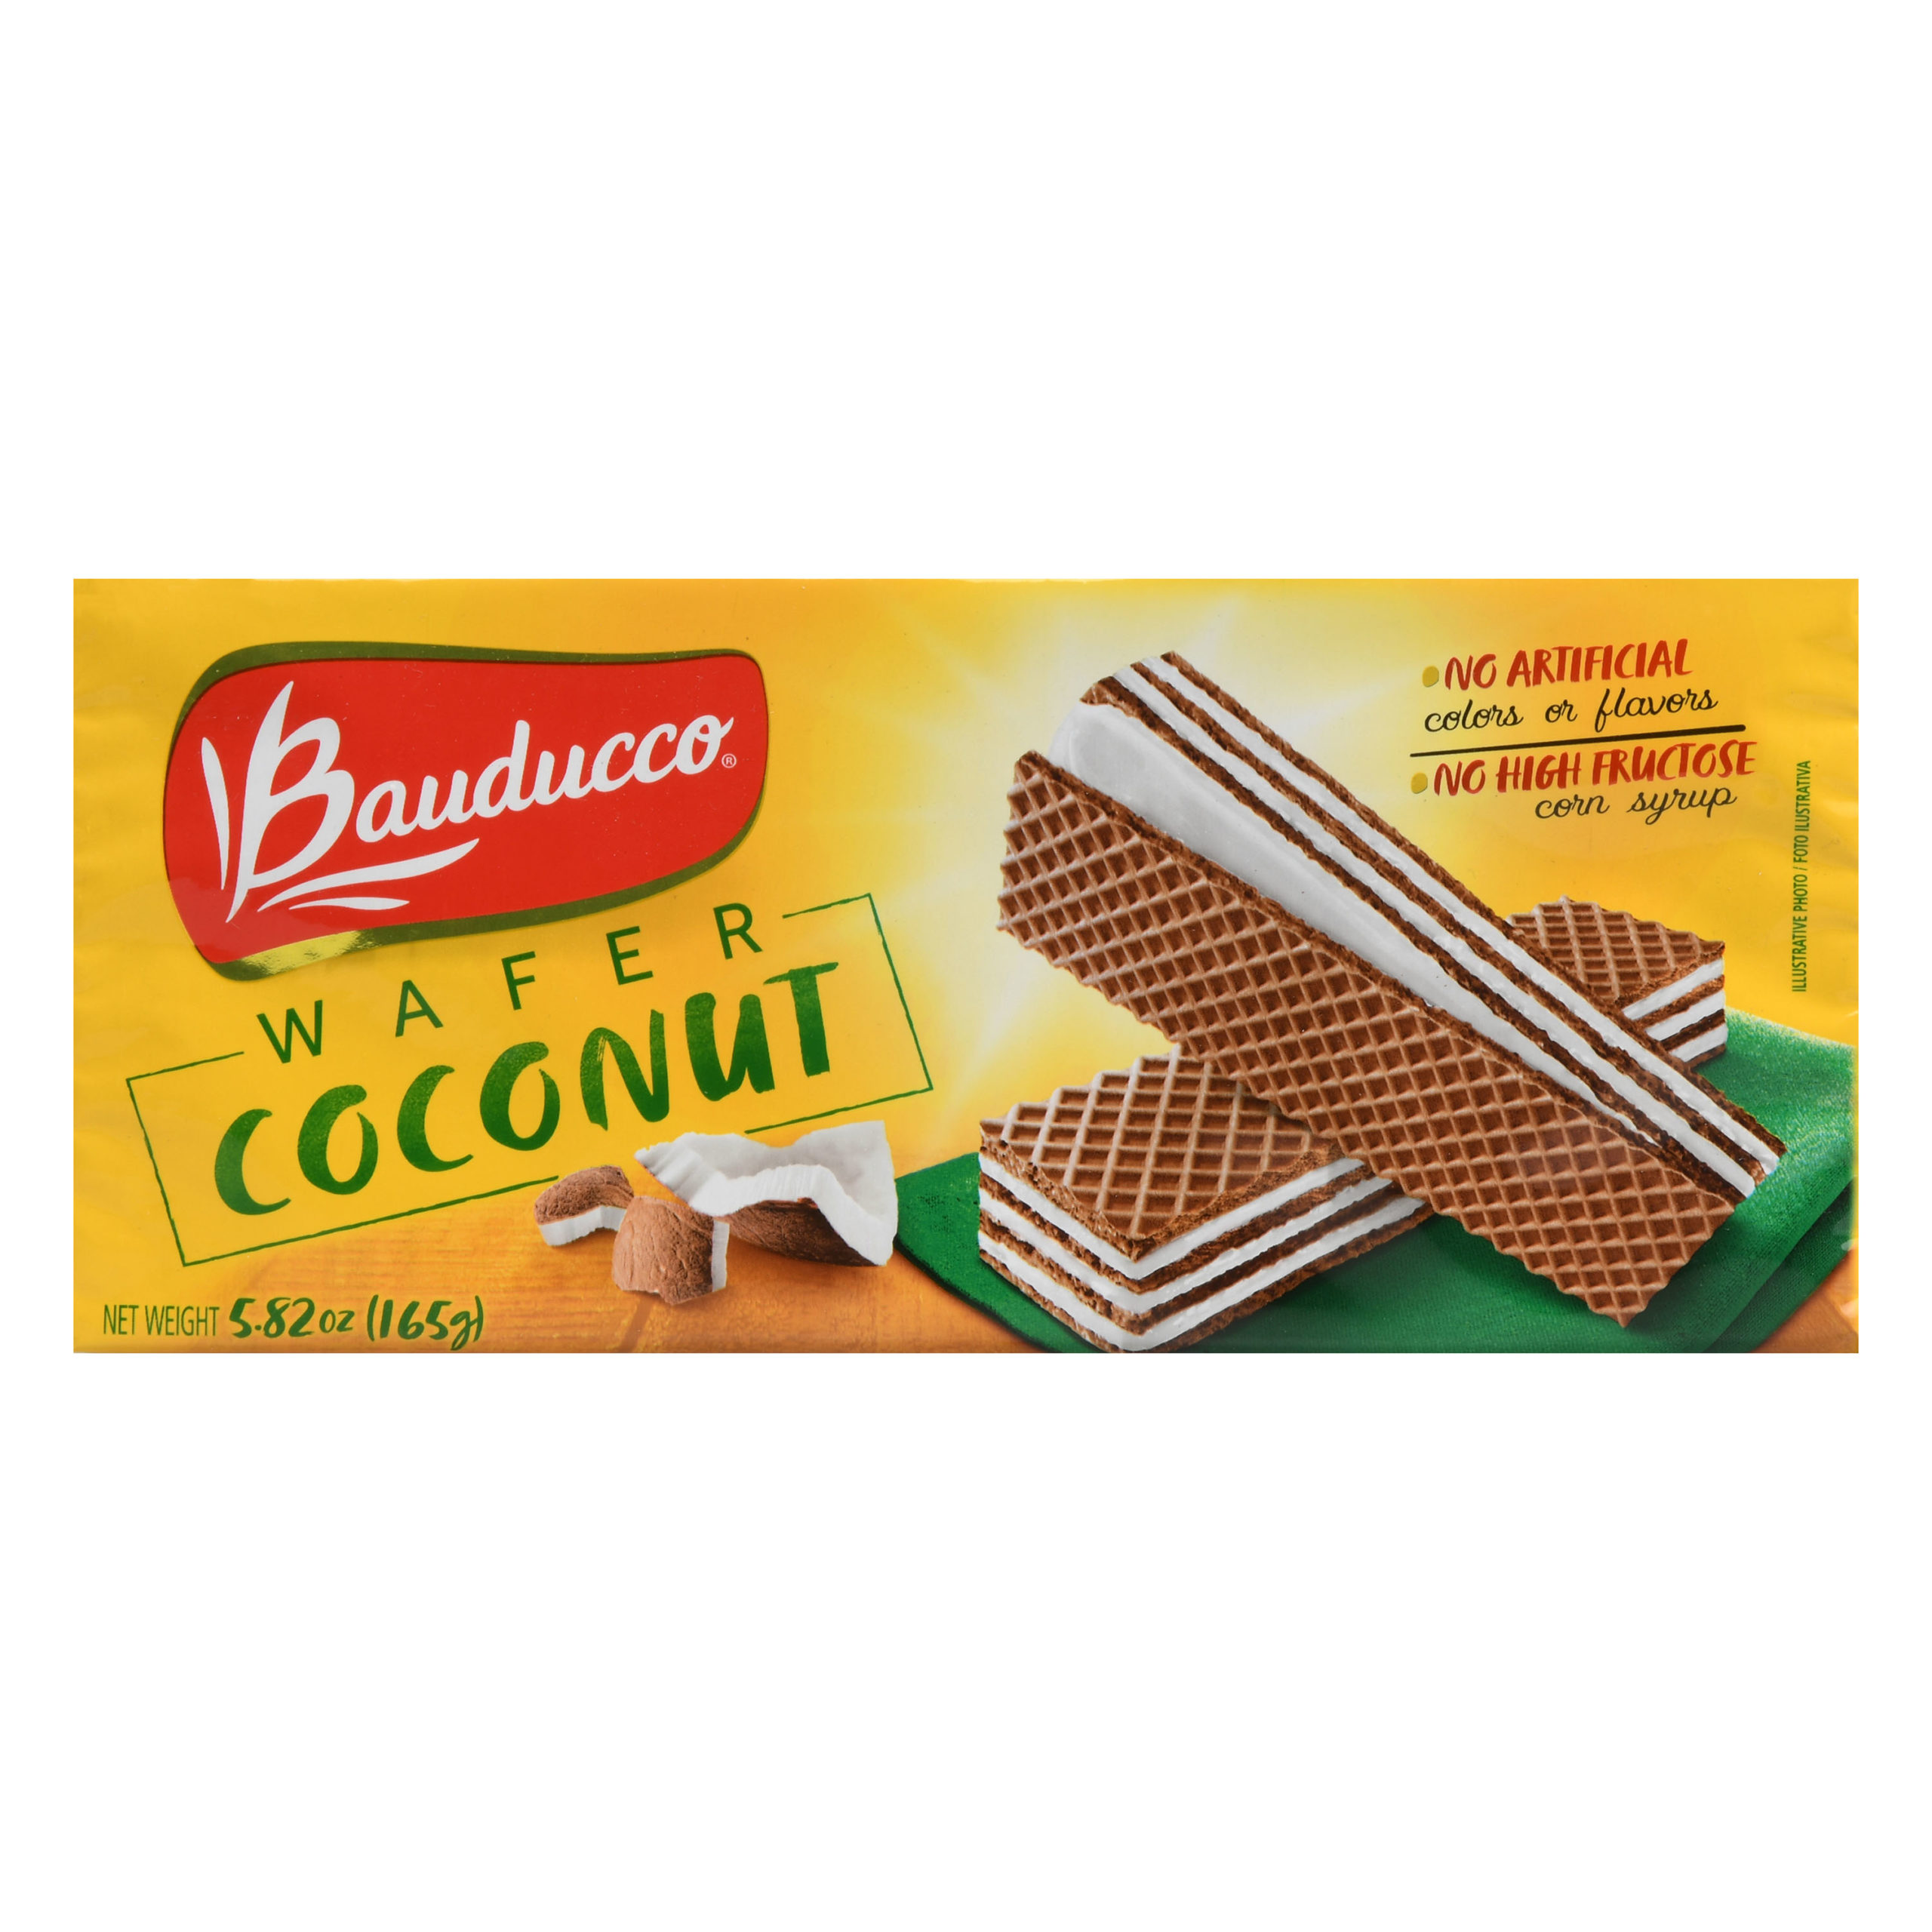 Bauducco Wafer Coconut 165G